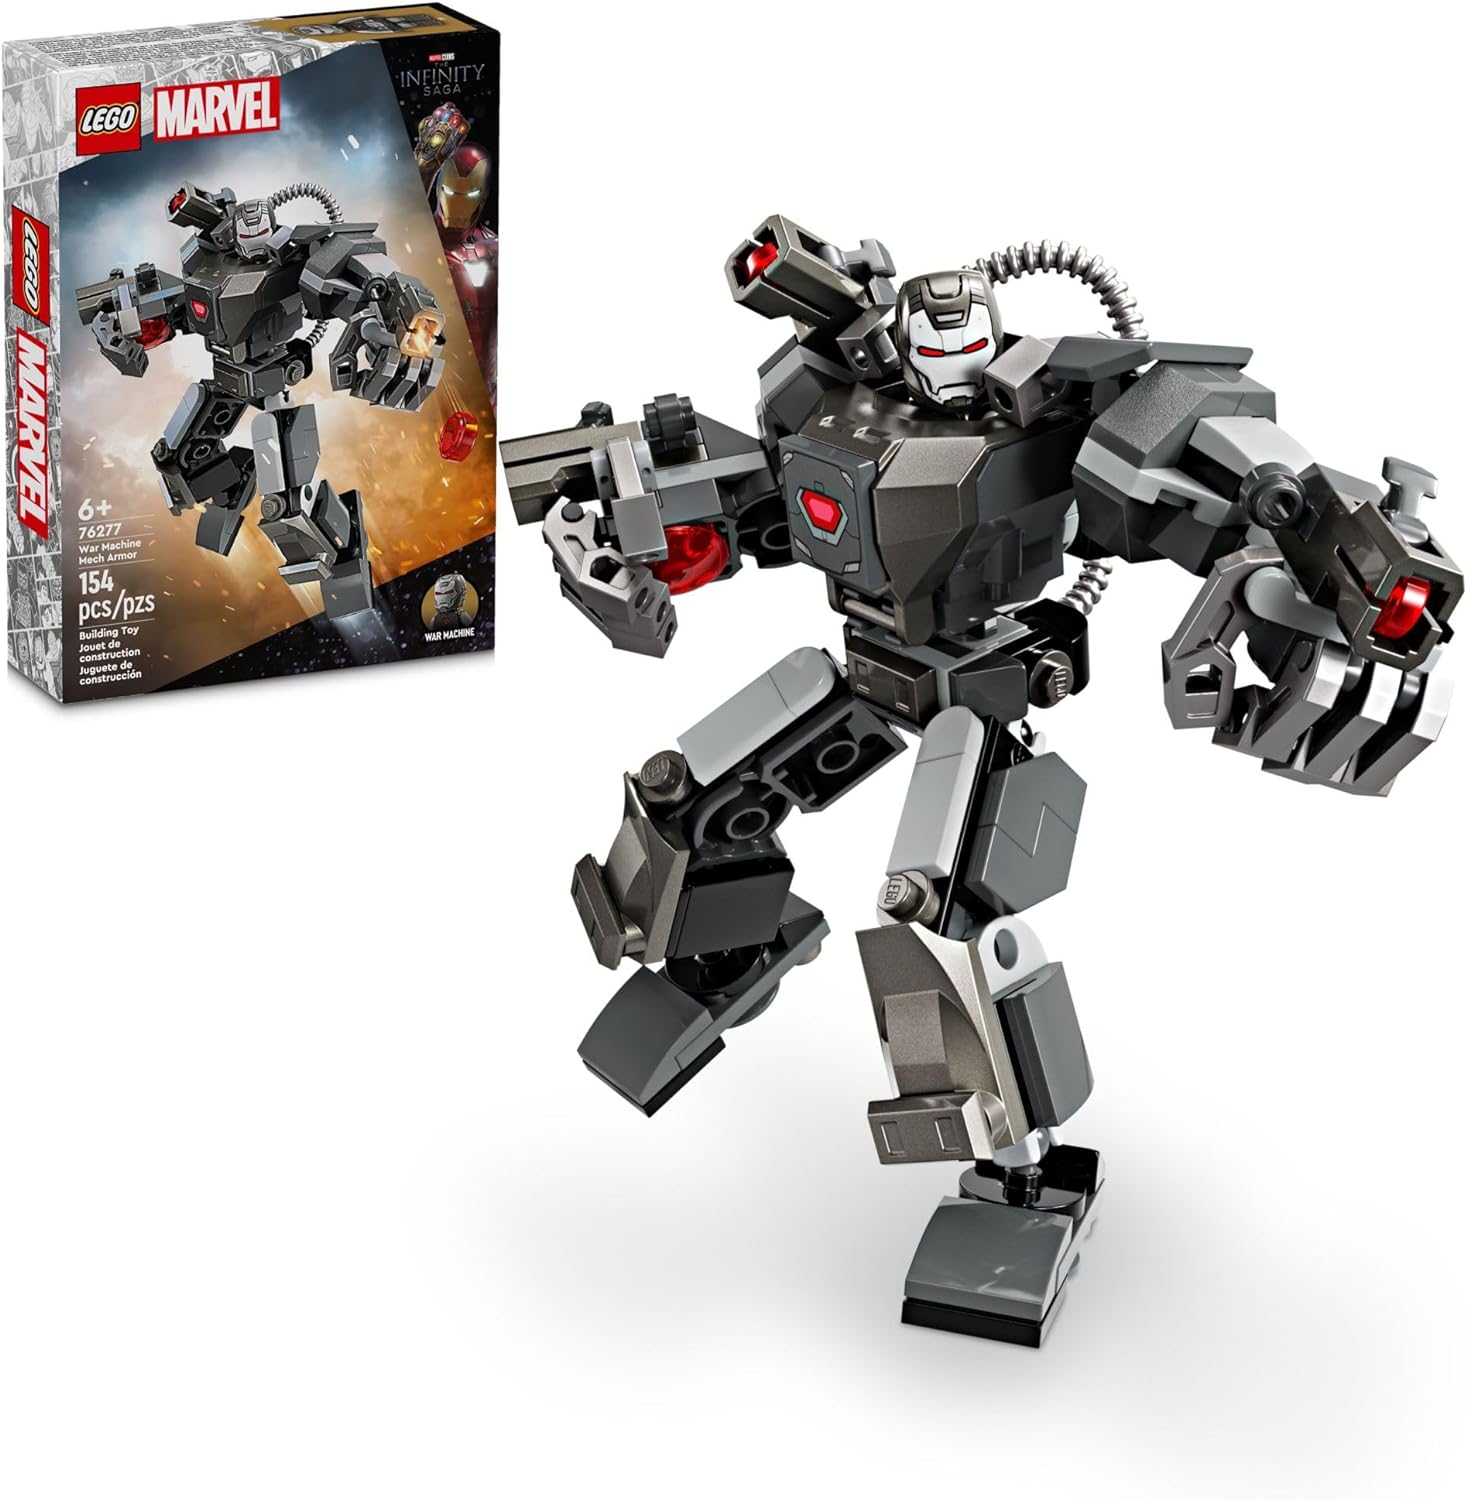 LEGO Marvel War Machine Mech Armor, Buildable Marvel Action Figure Toy $11.99